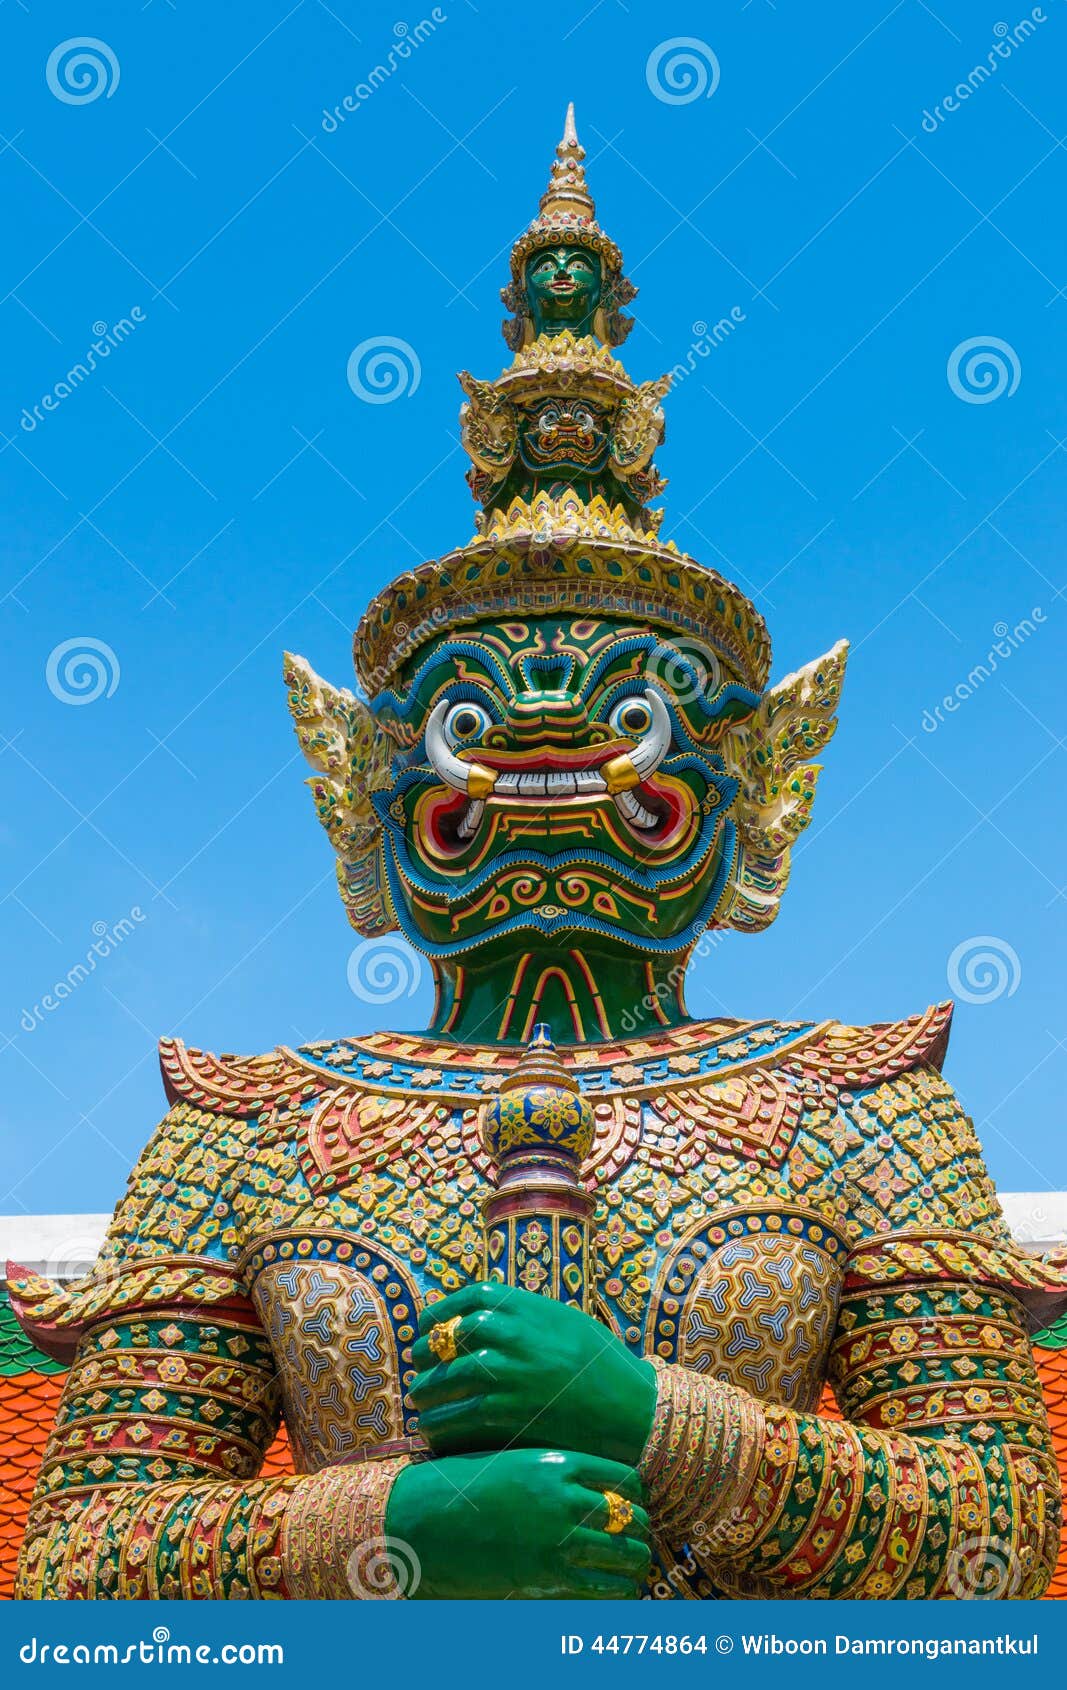 The Green Giant Statue (called Ravana) at Wat Phra Si Rattana ...